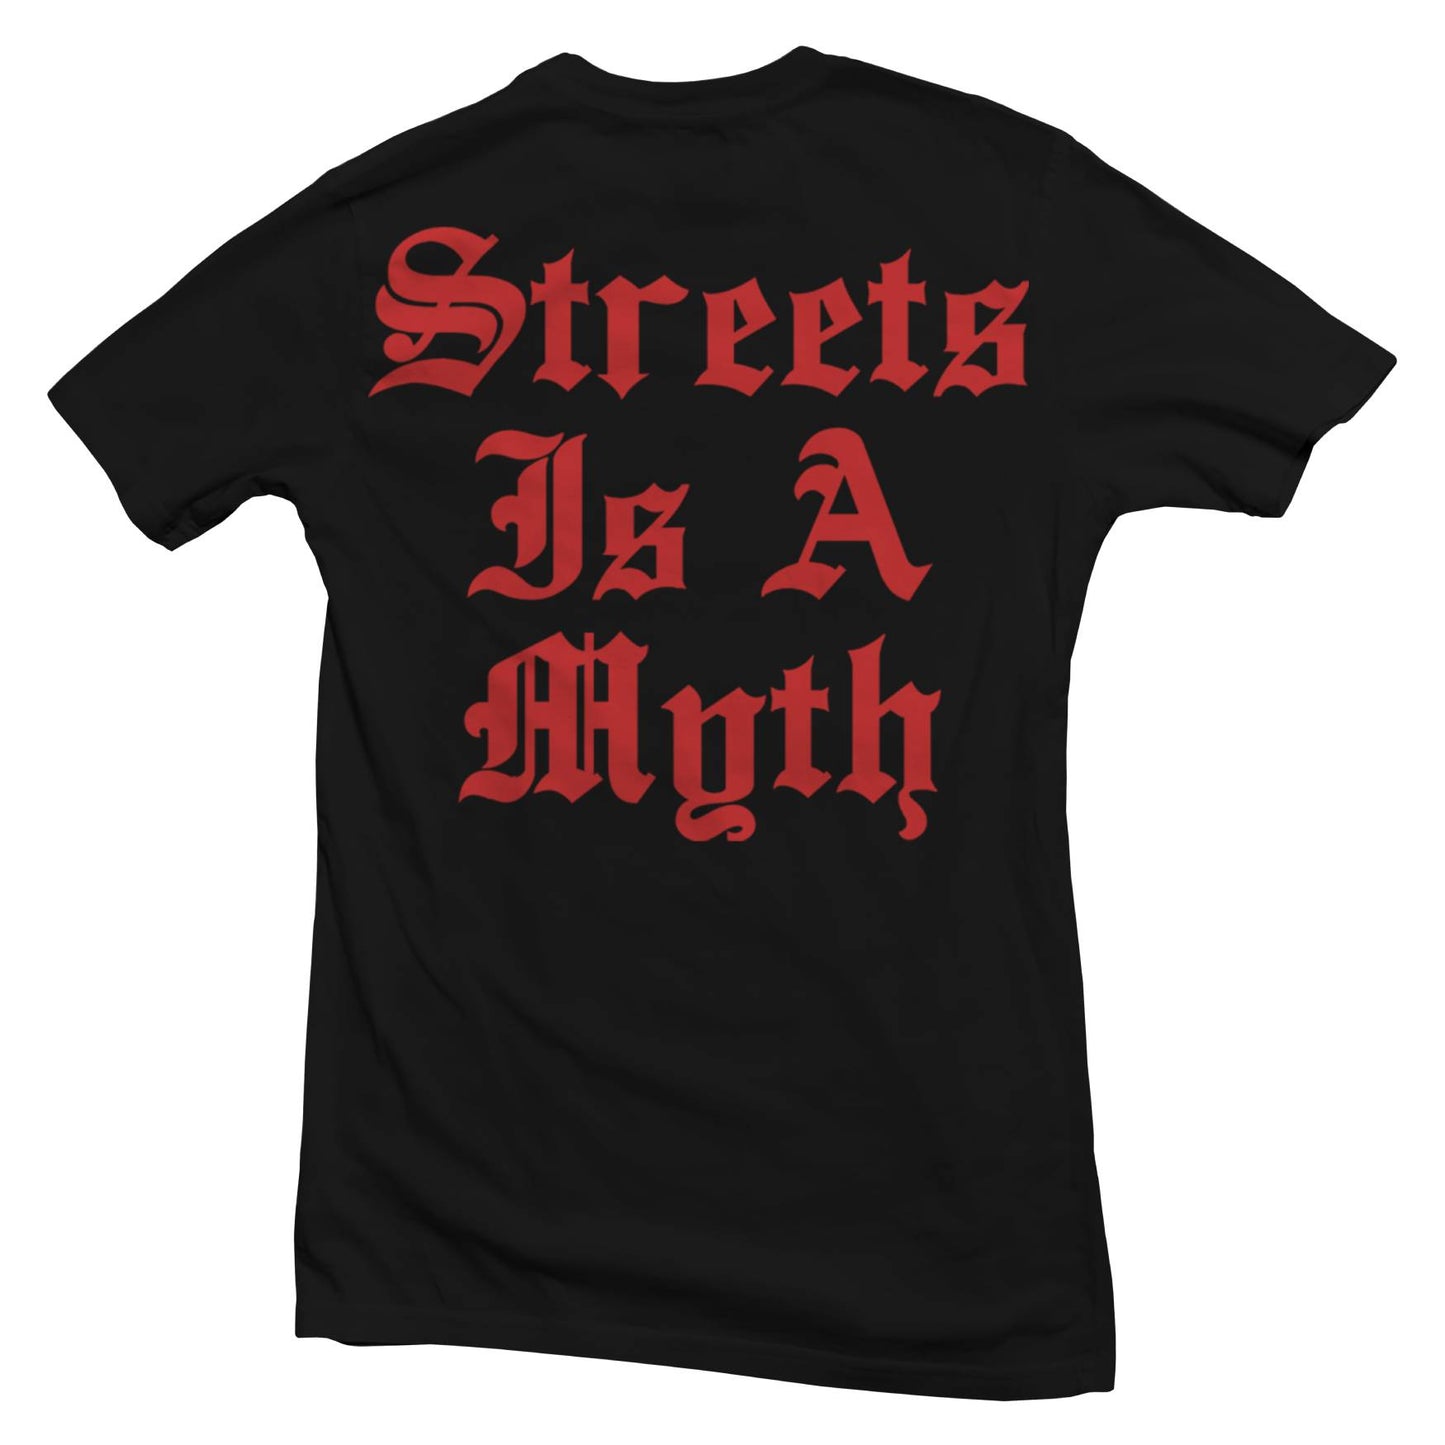 DEAR HATER STREETS IS A MYTH TEE - BLACK